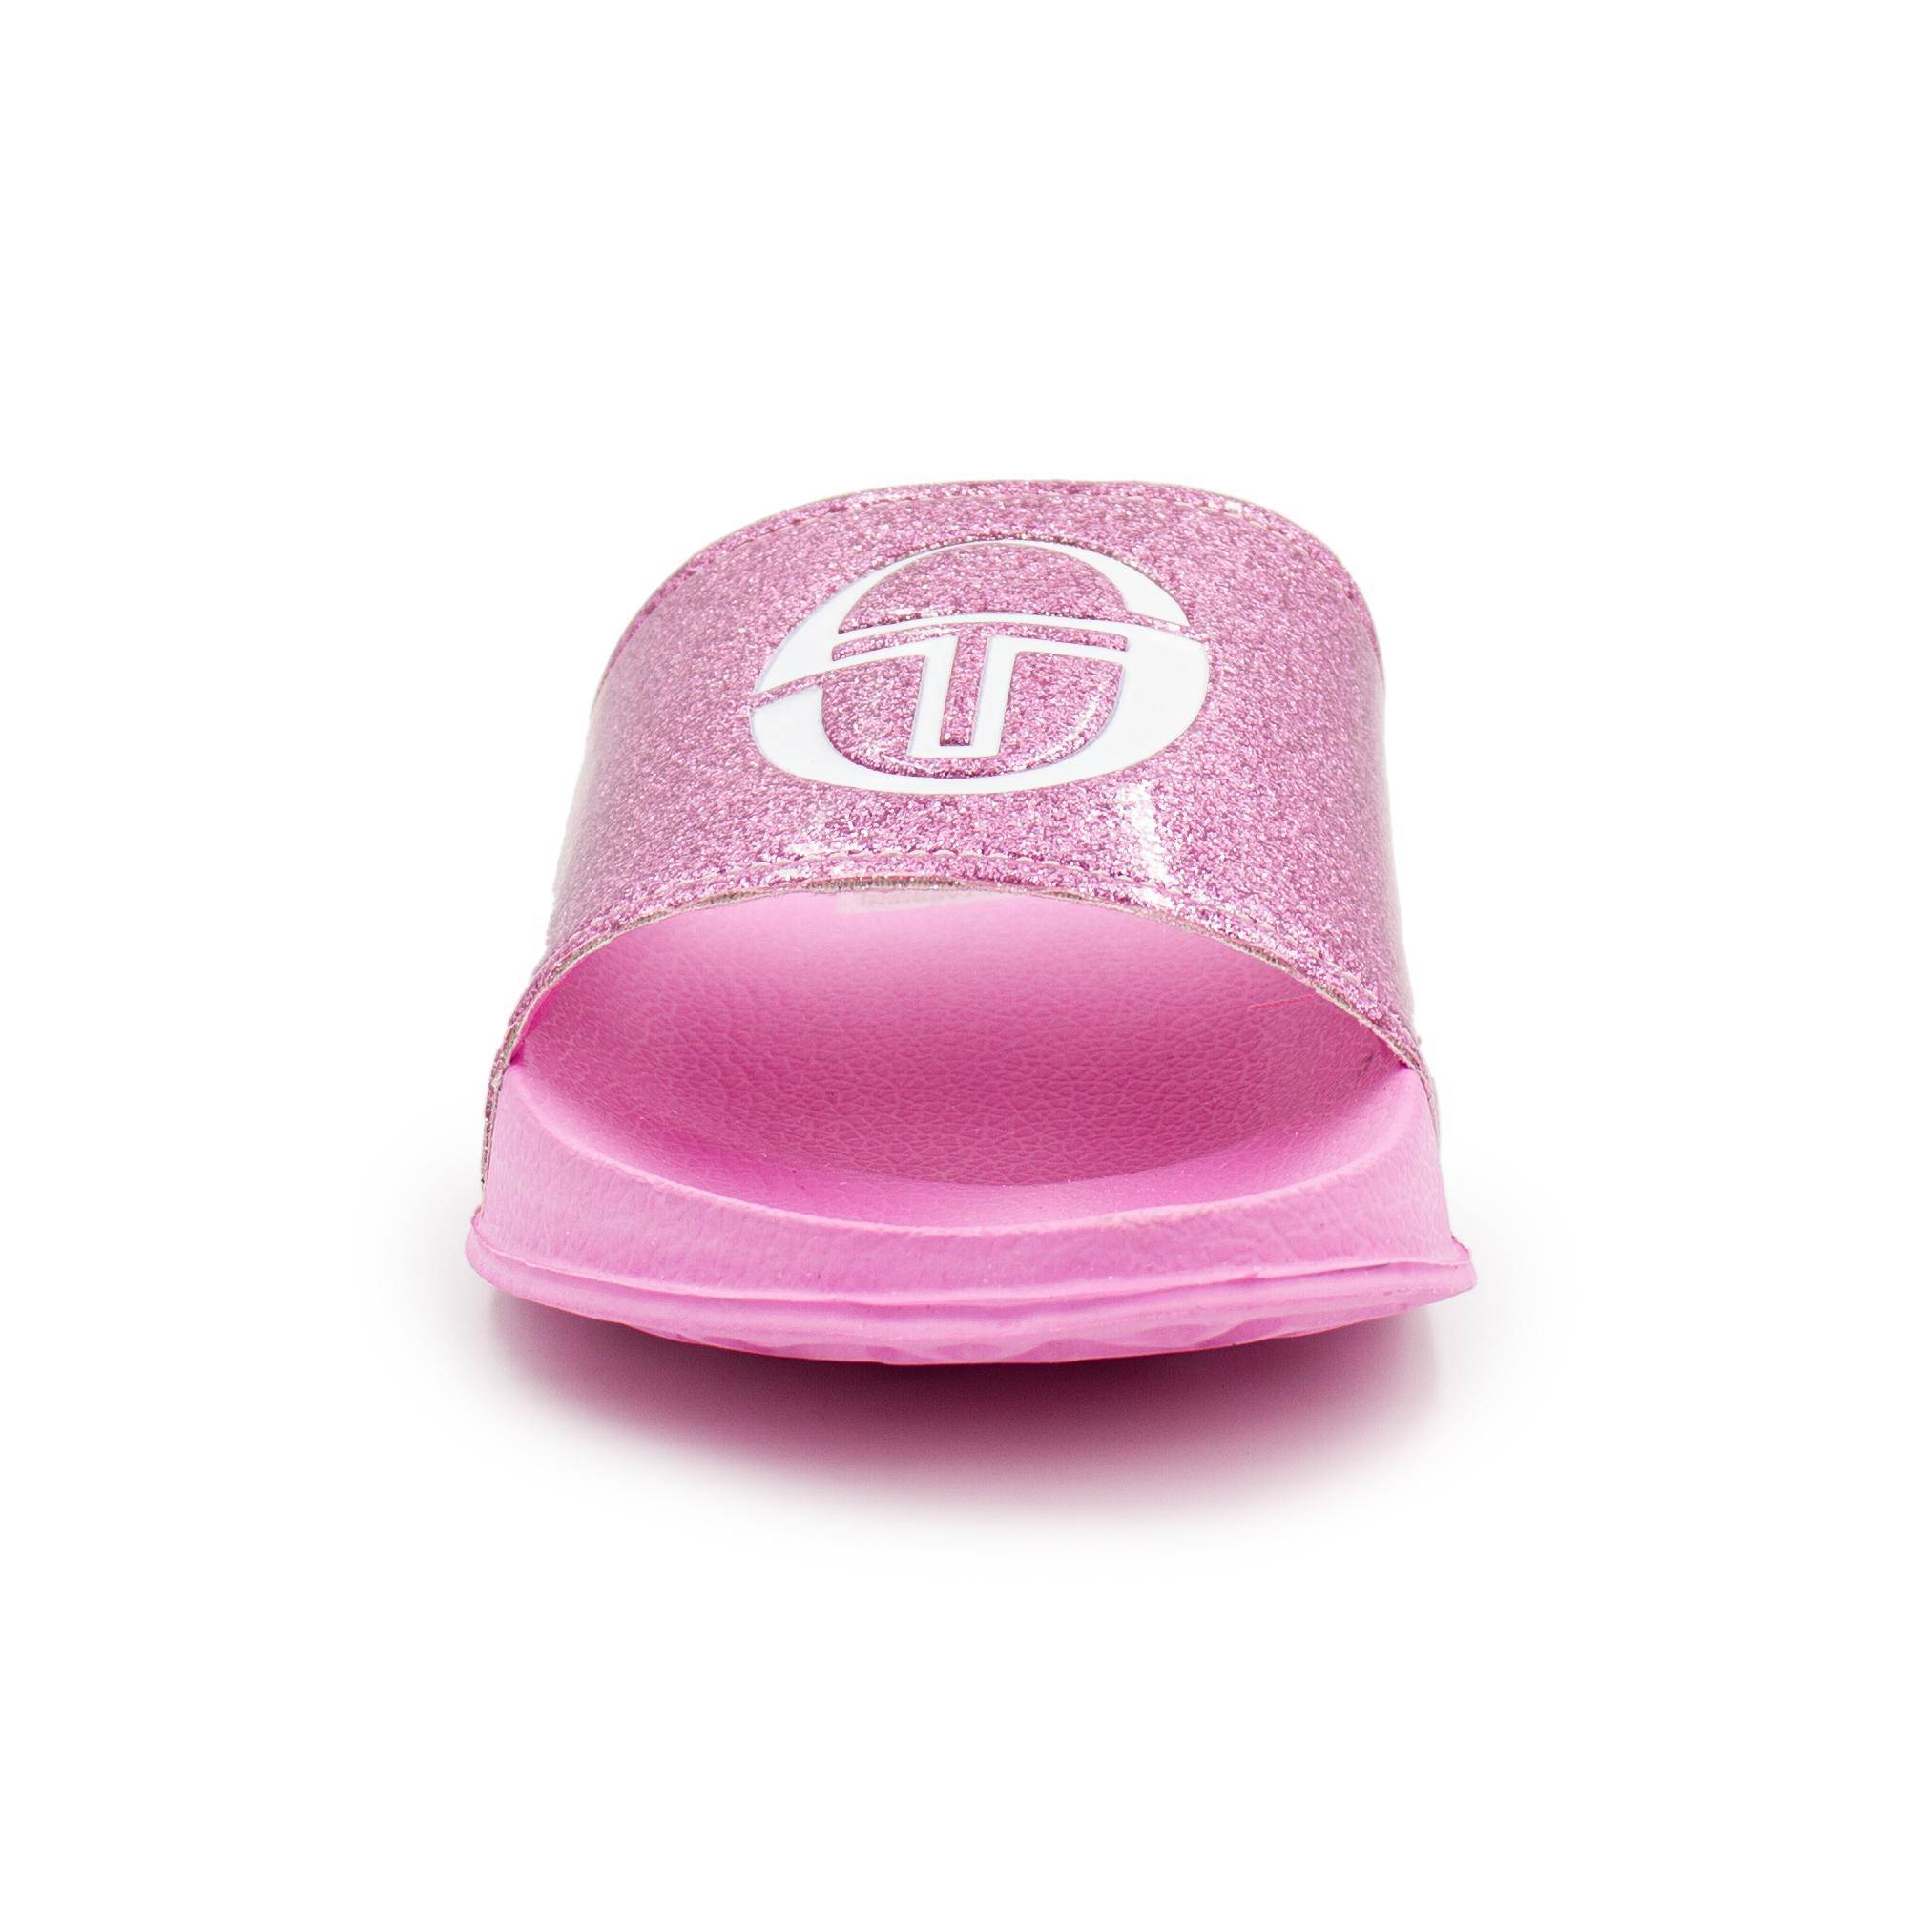 Женские сланцы Sergio Tacchini (REMIX GLITTER STW219006), розовые, цвет розовый, размер 38 - фото 3